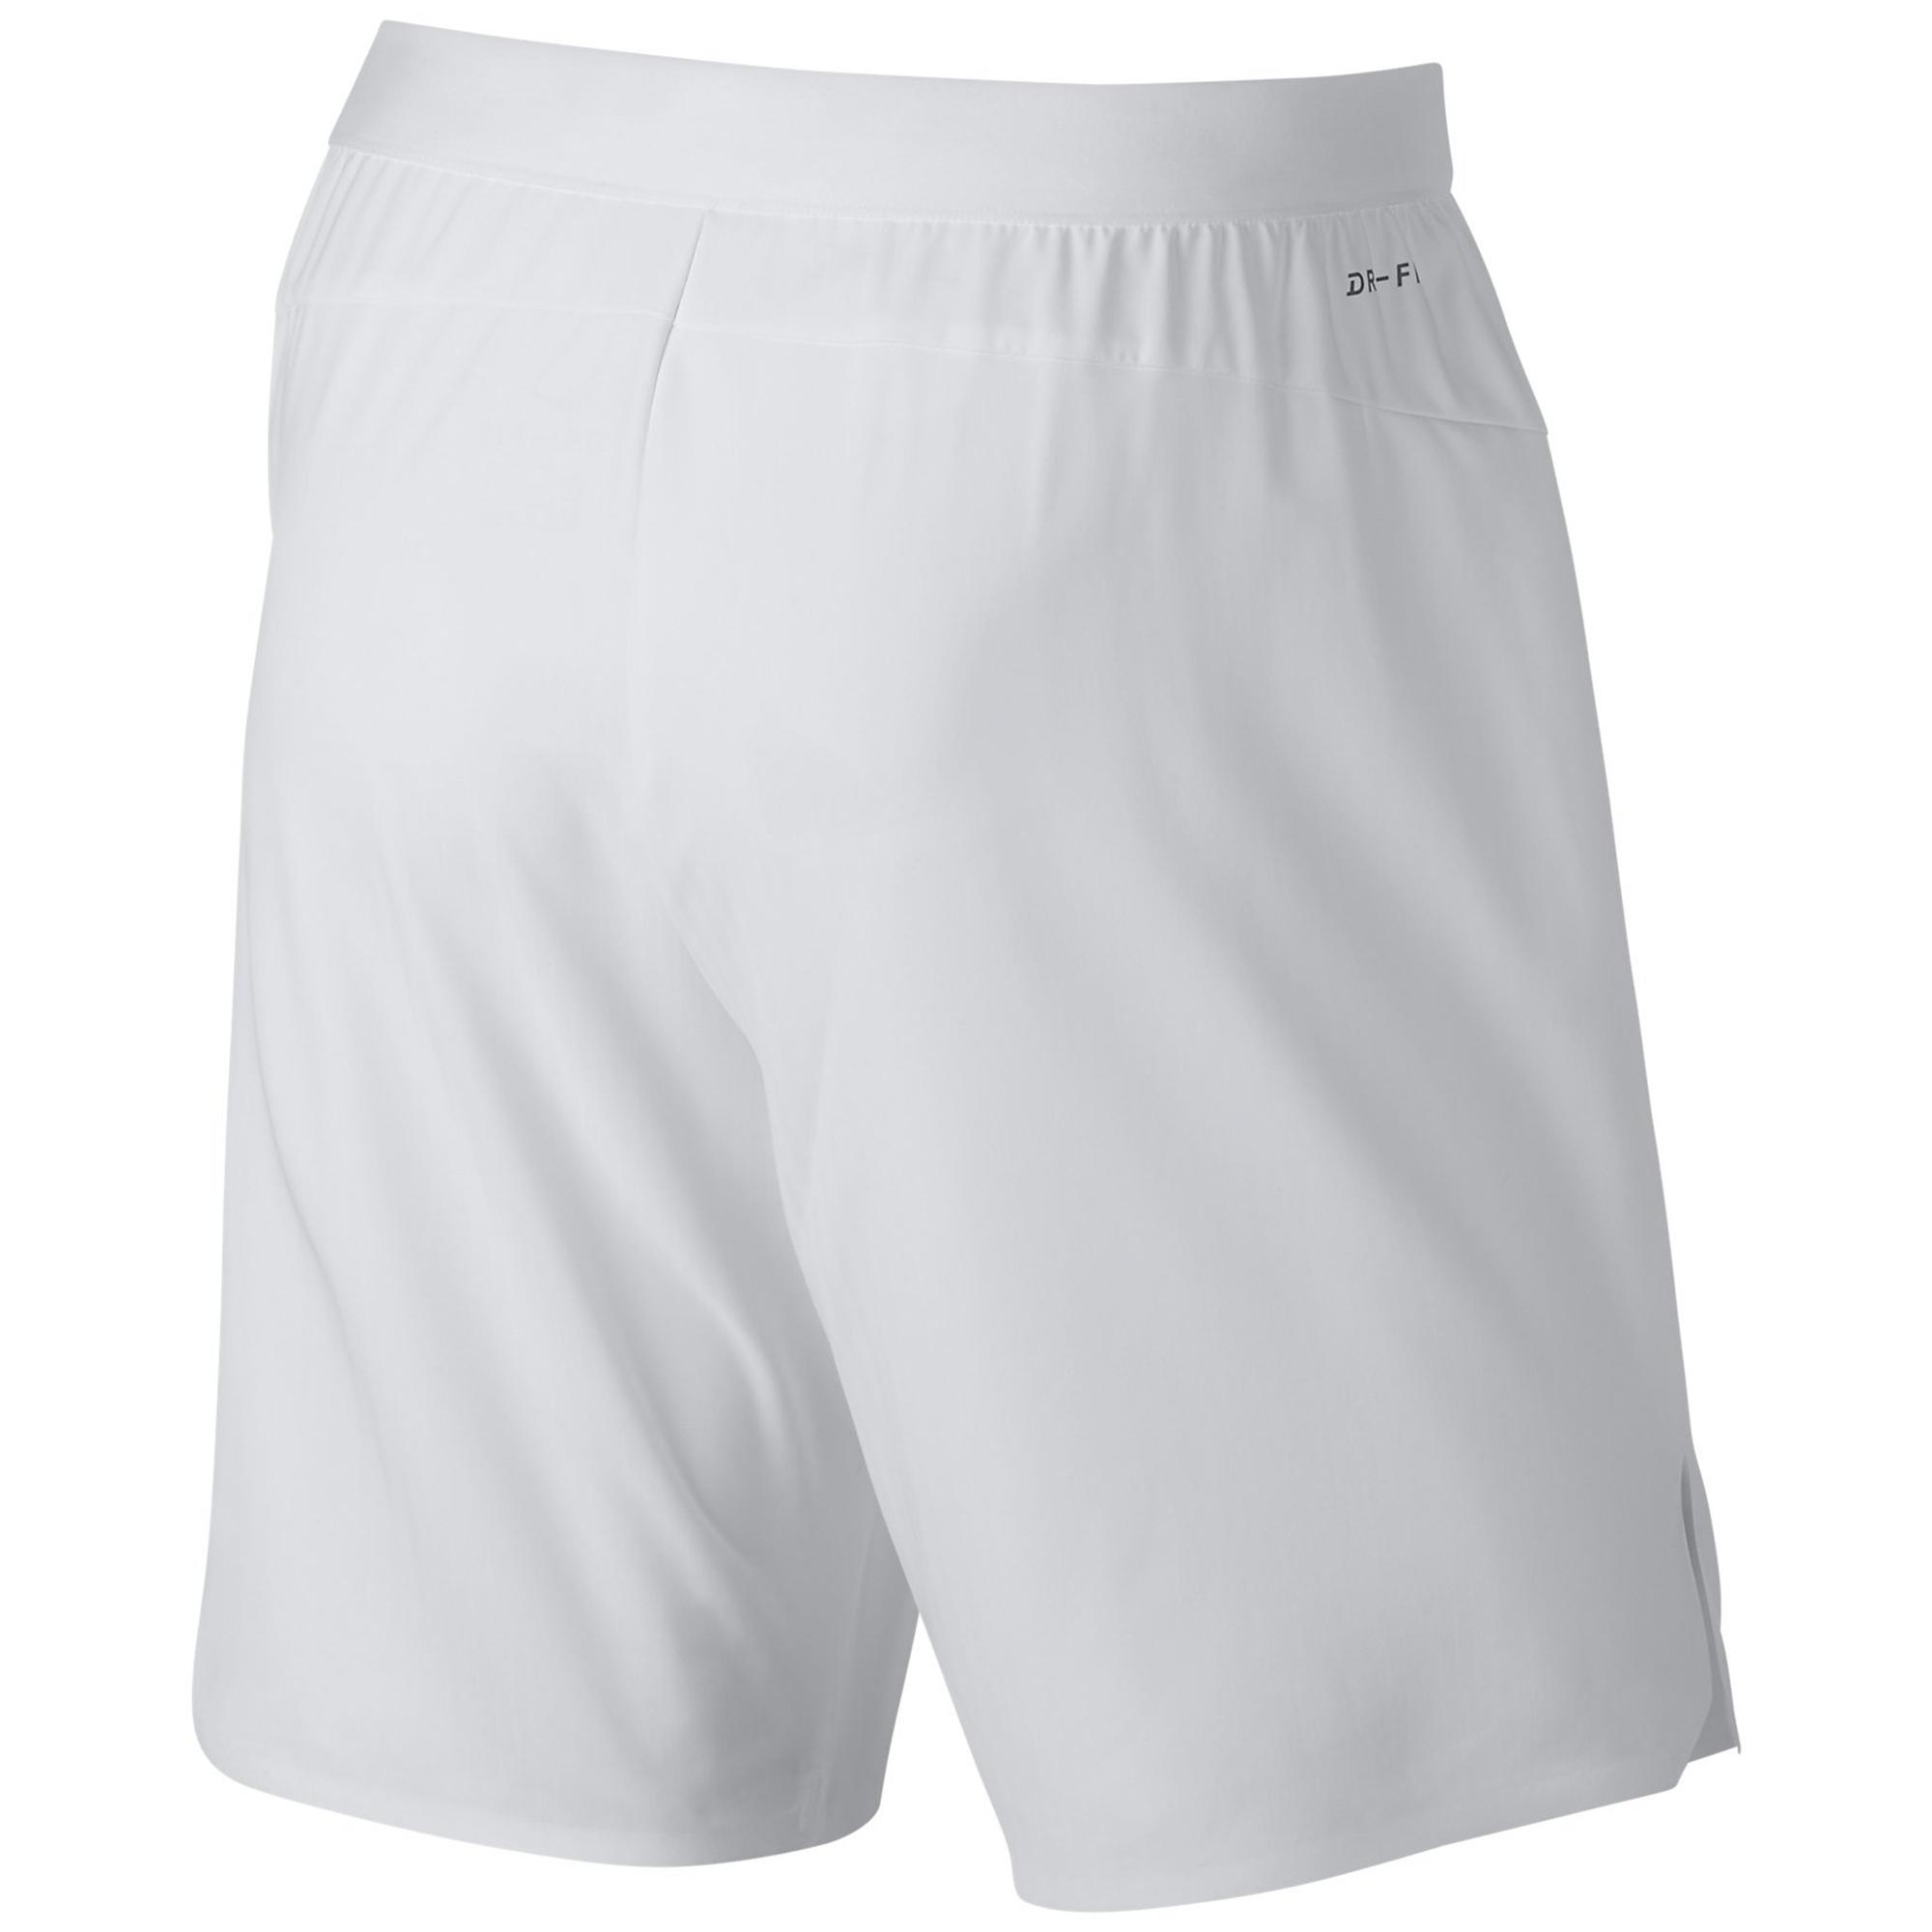 Nike Mens Court Flex 9 Inch Tennis Shorts - White - Tennisnuts.com